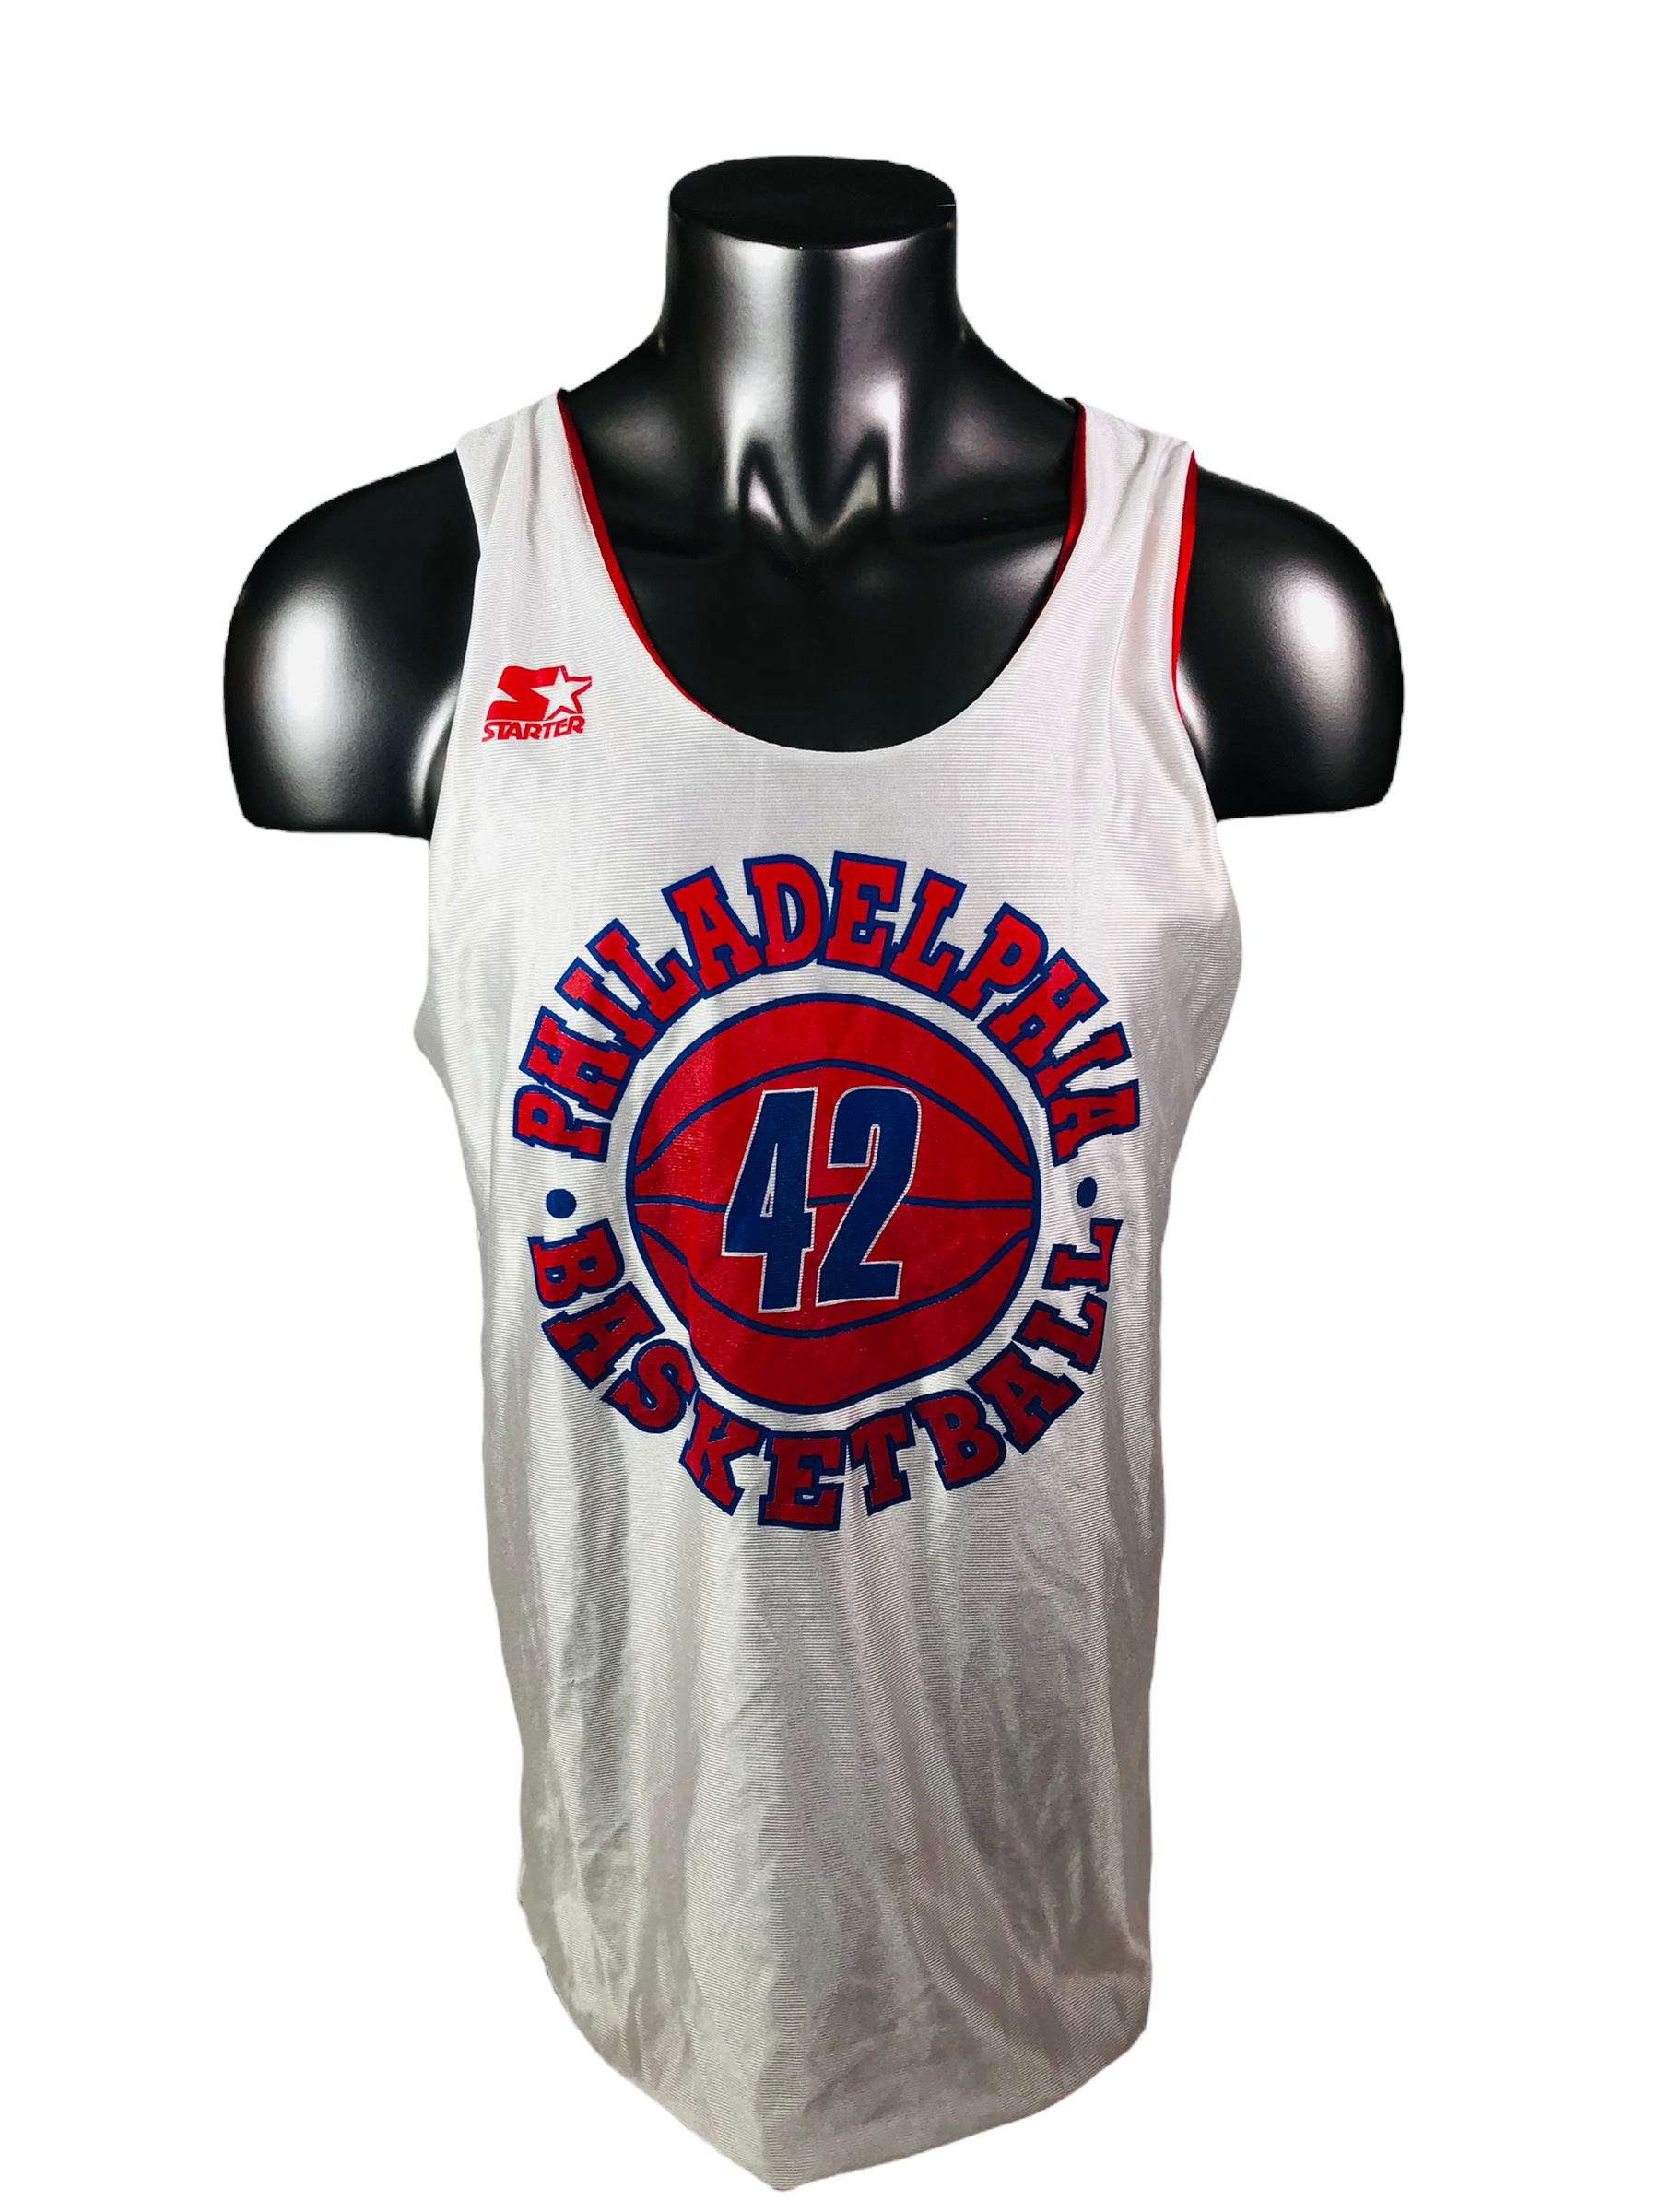 Vintage Philadelphia 76ers Jerry Stackhouse Jersey Sz. M (40)